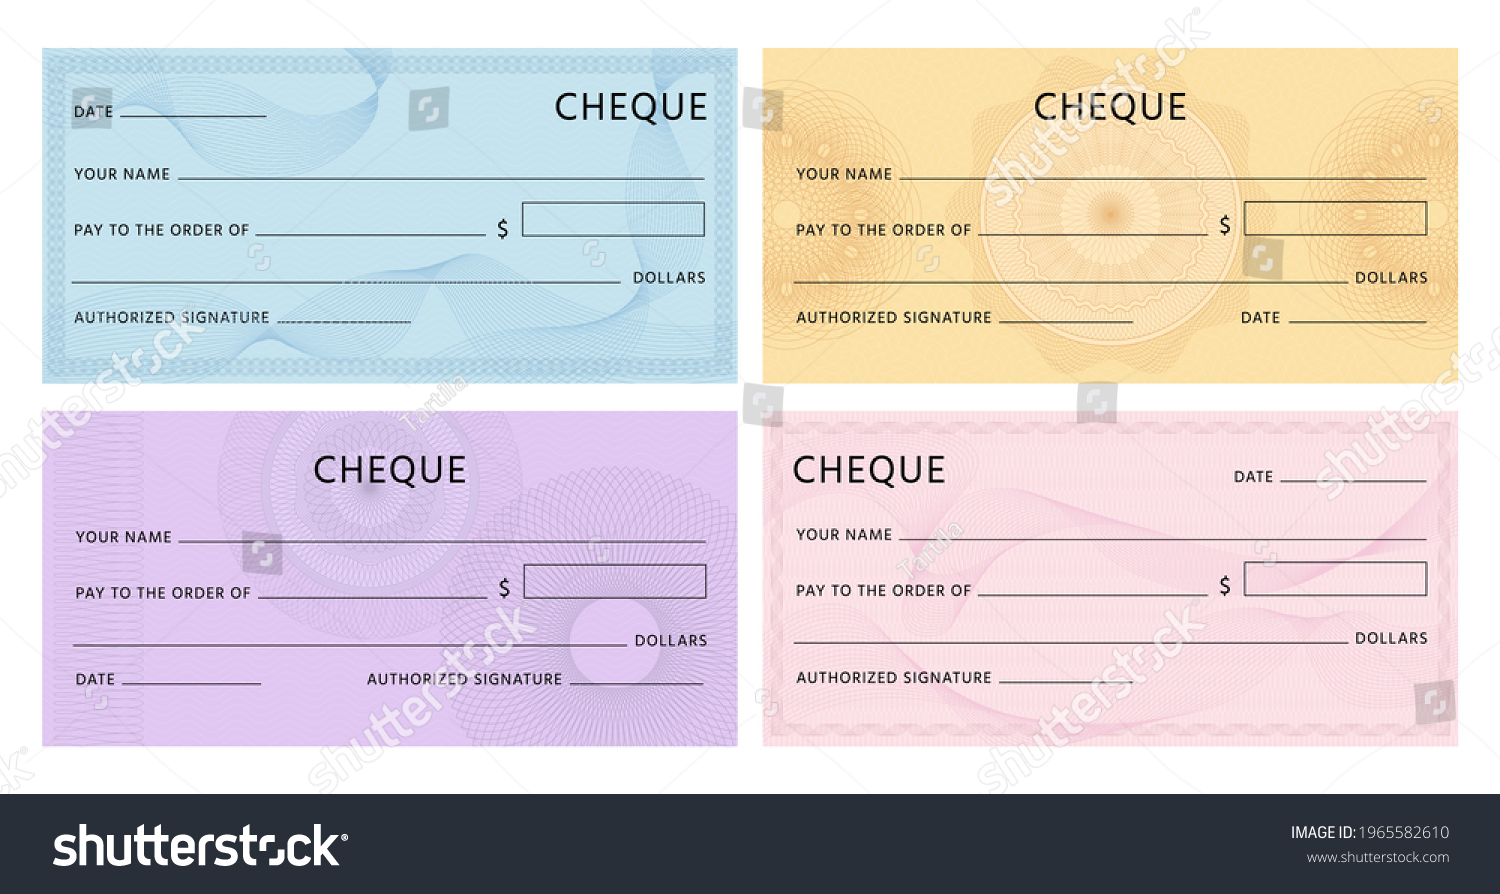 Cheque Guilloche Bank Chequebook Template Blank Stock Illustration ...